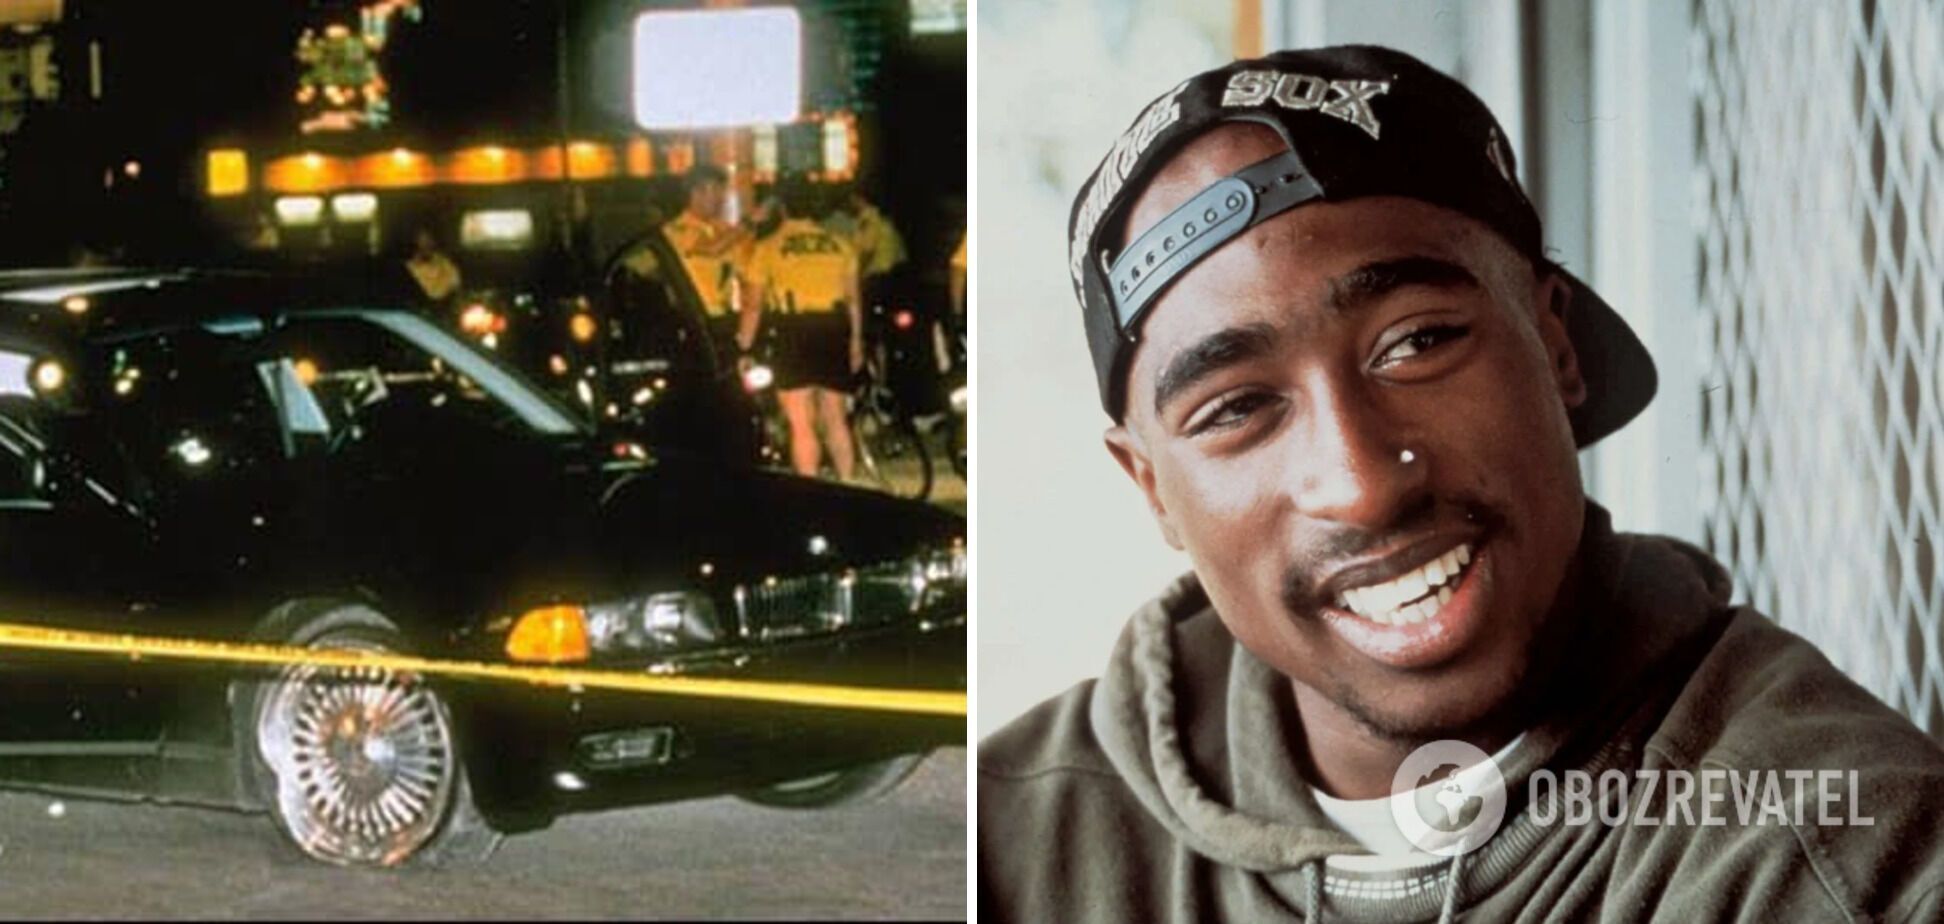 Tupac Shakur was shot